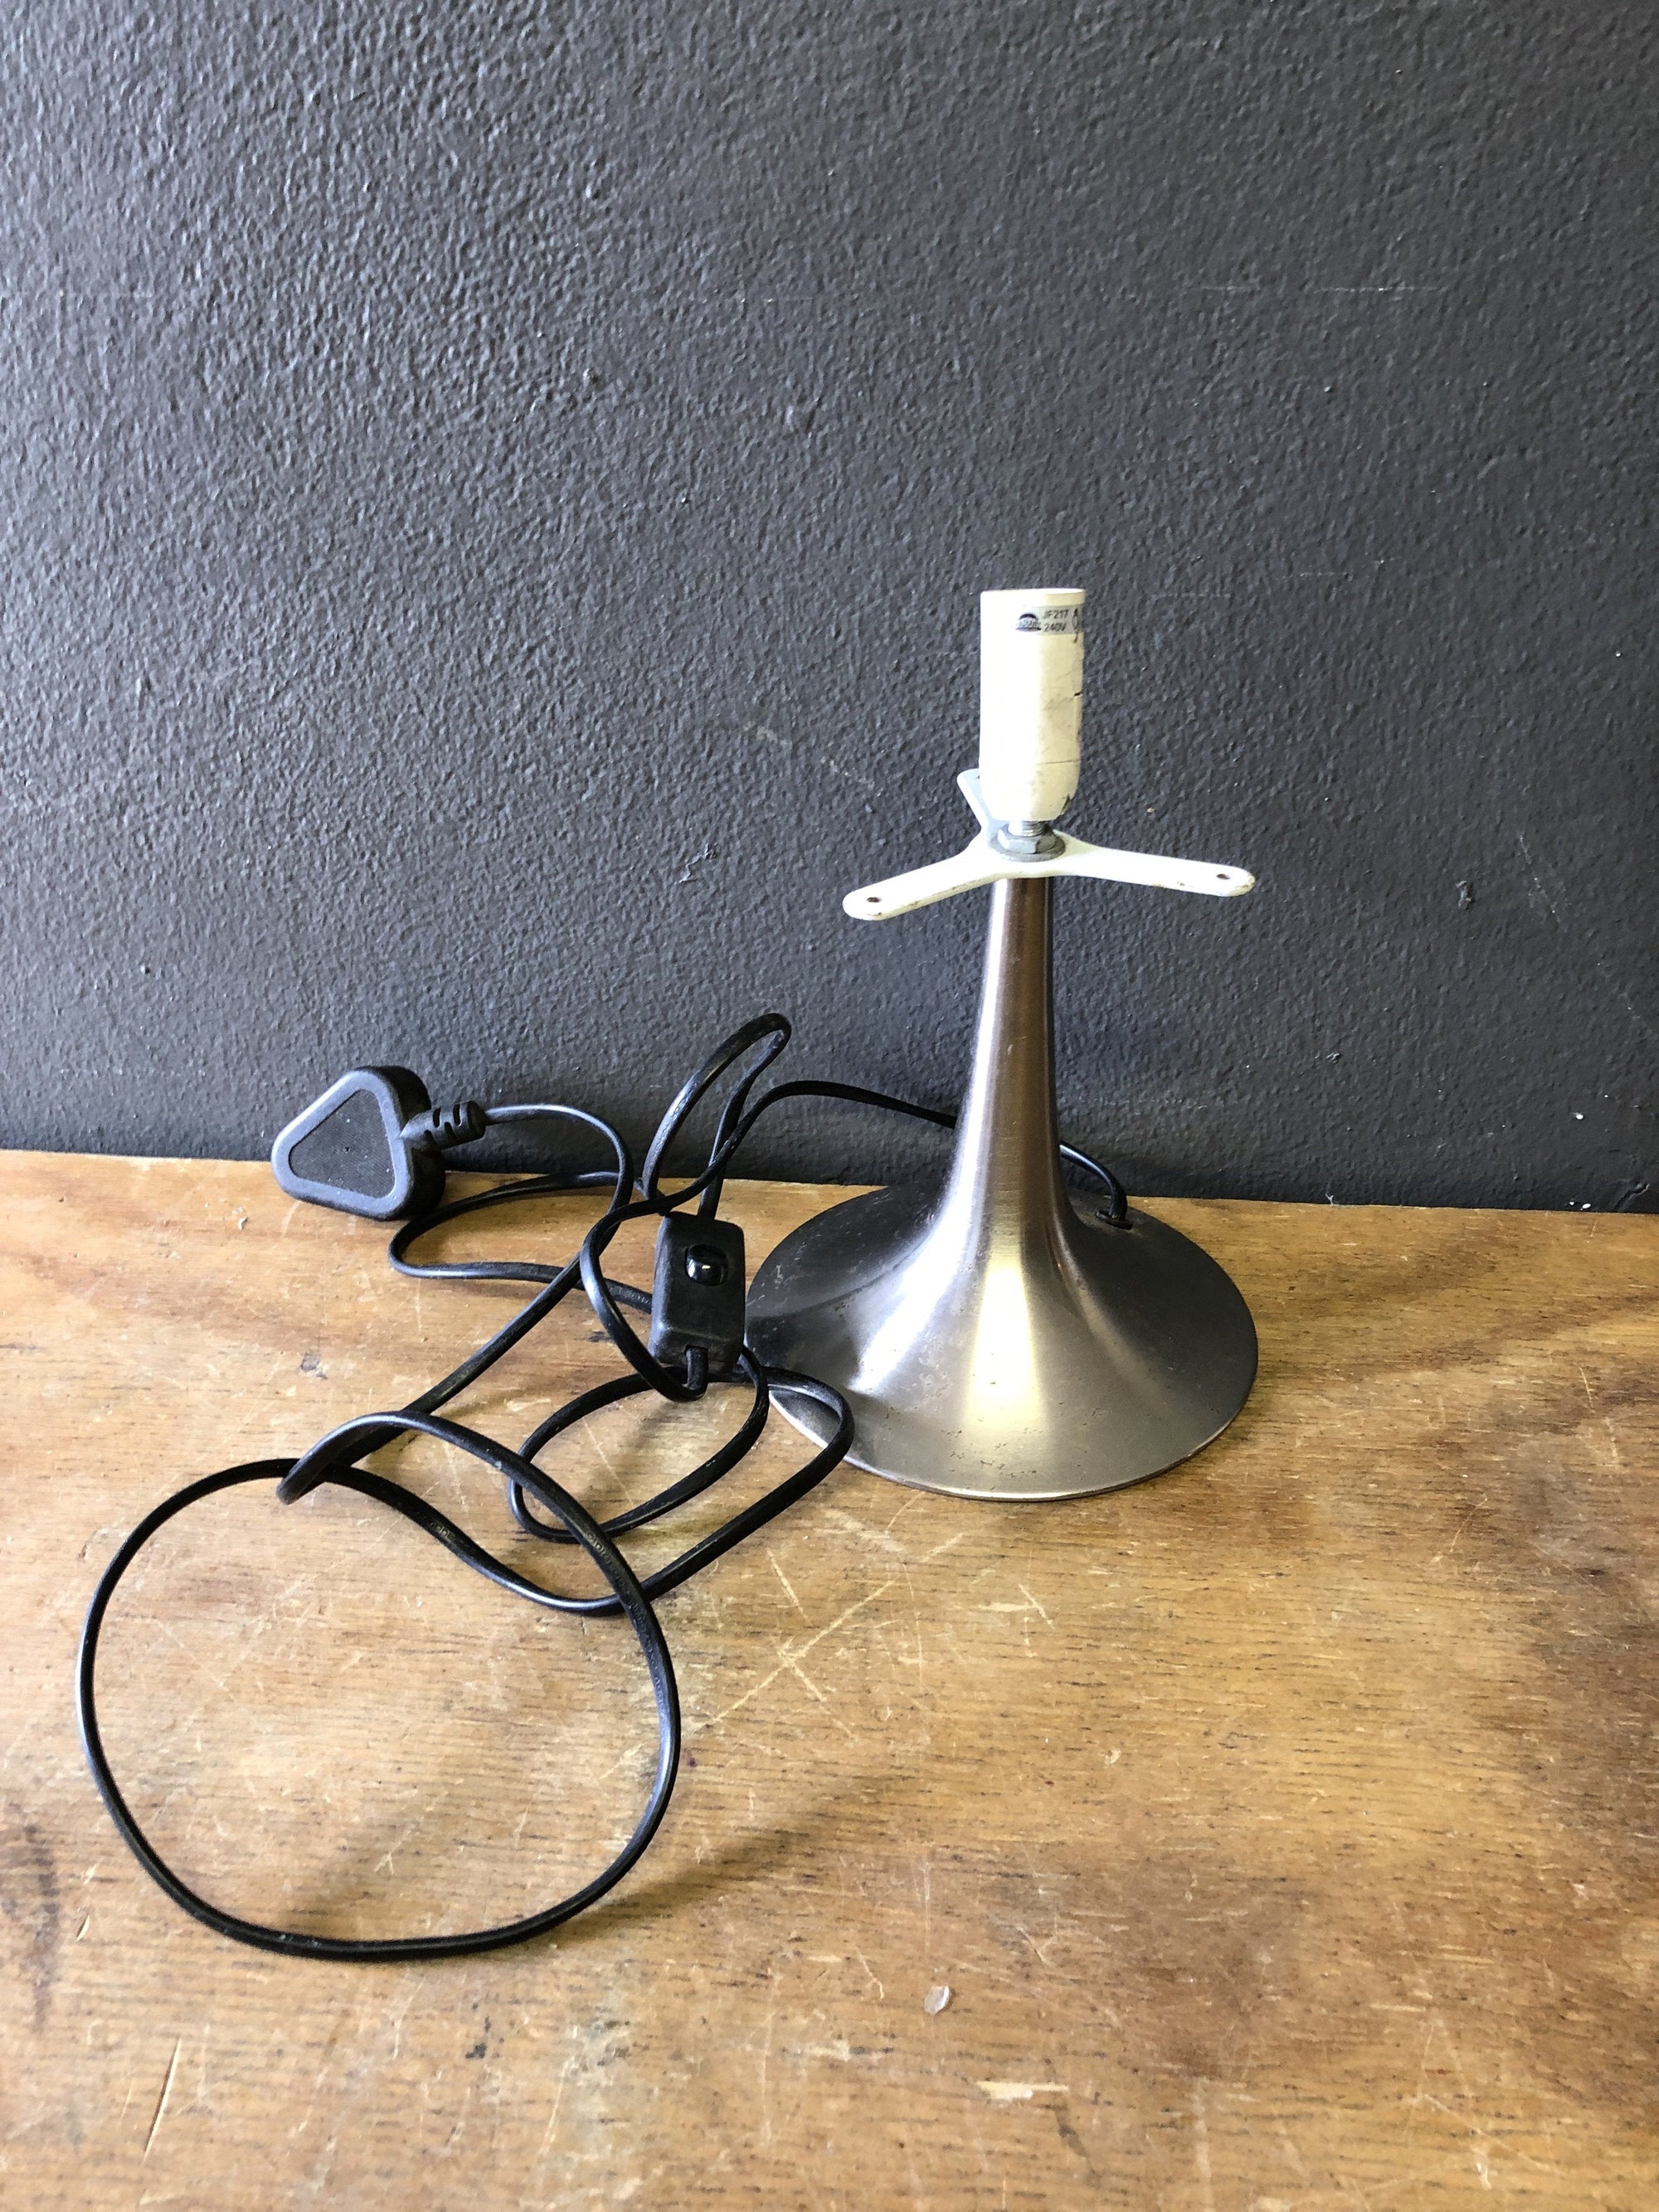 Table lamp - 2ndhandwarehouse.com